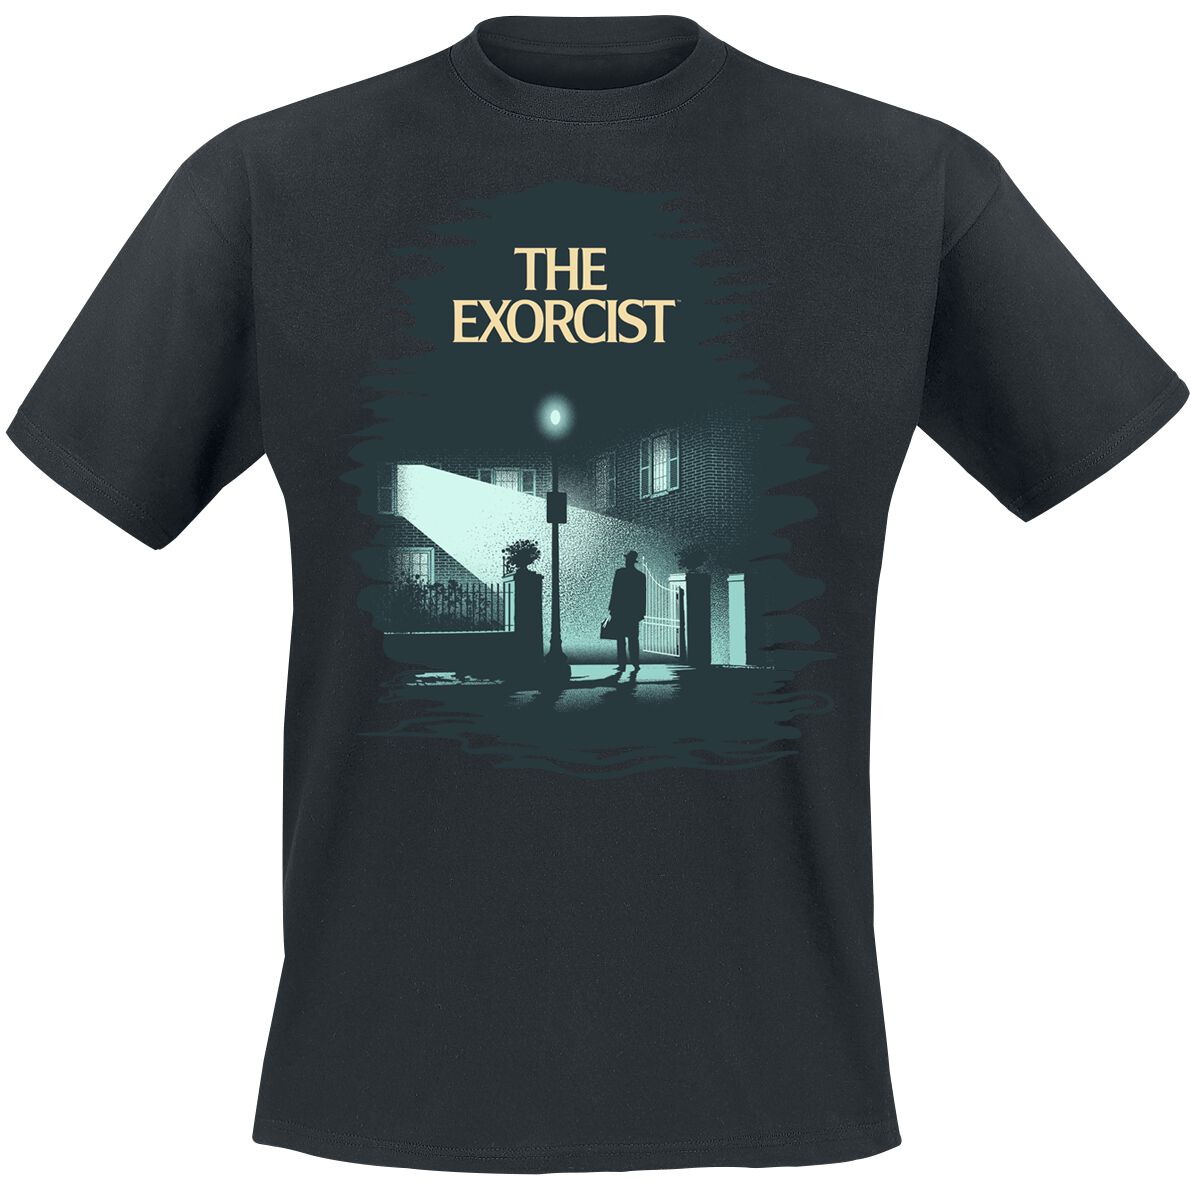 The Exorcist Poster T-Shirt black